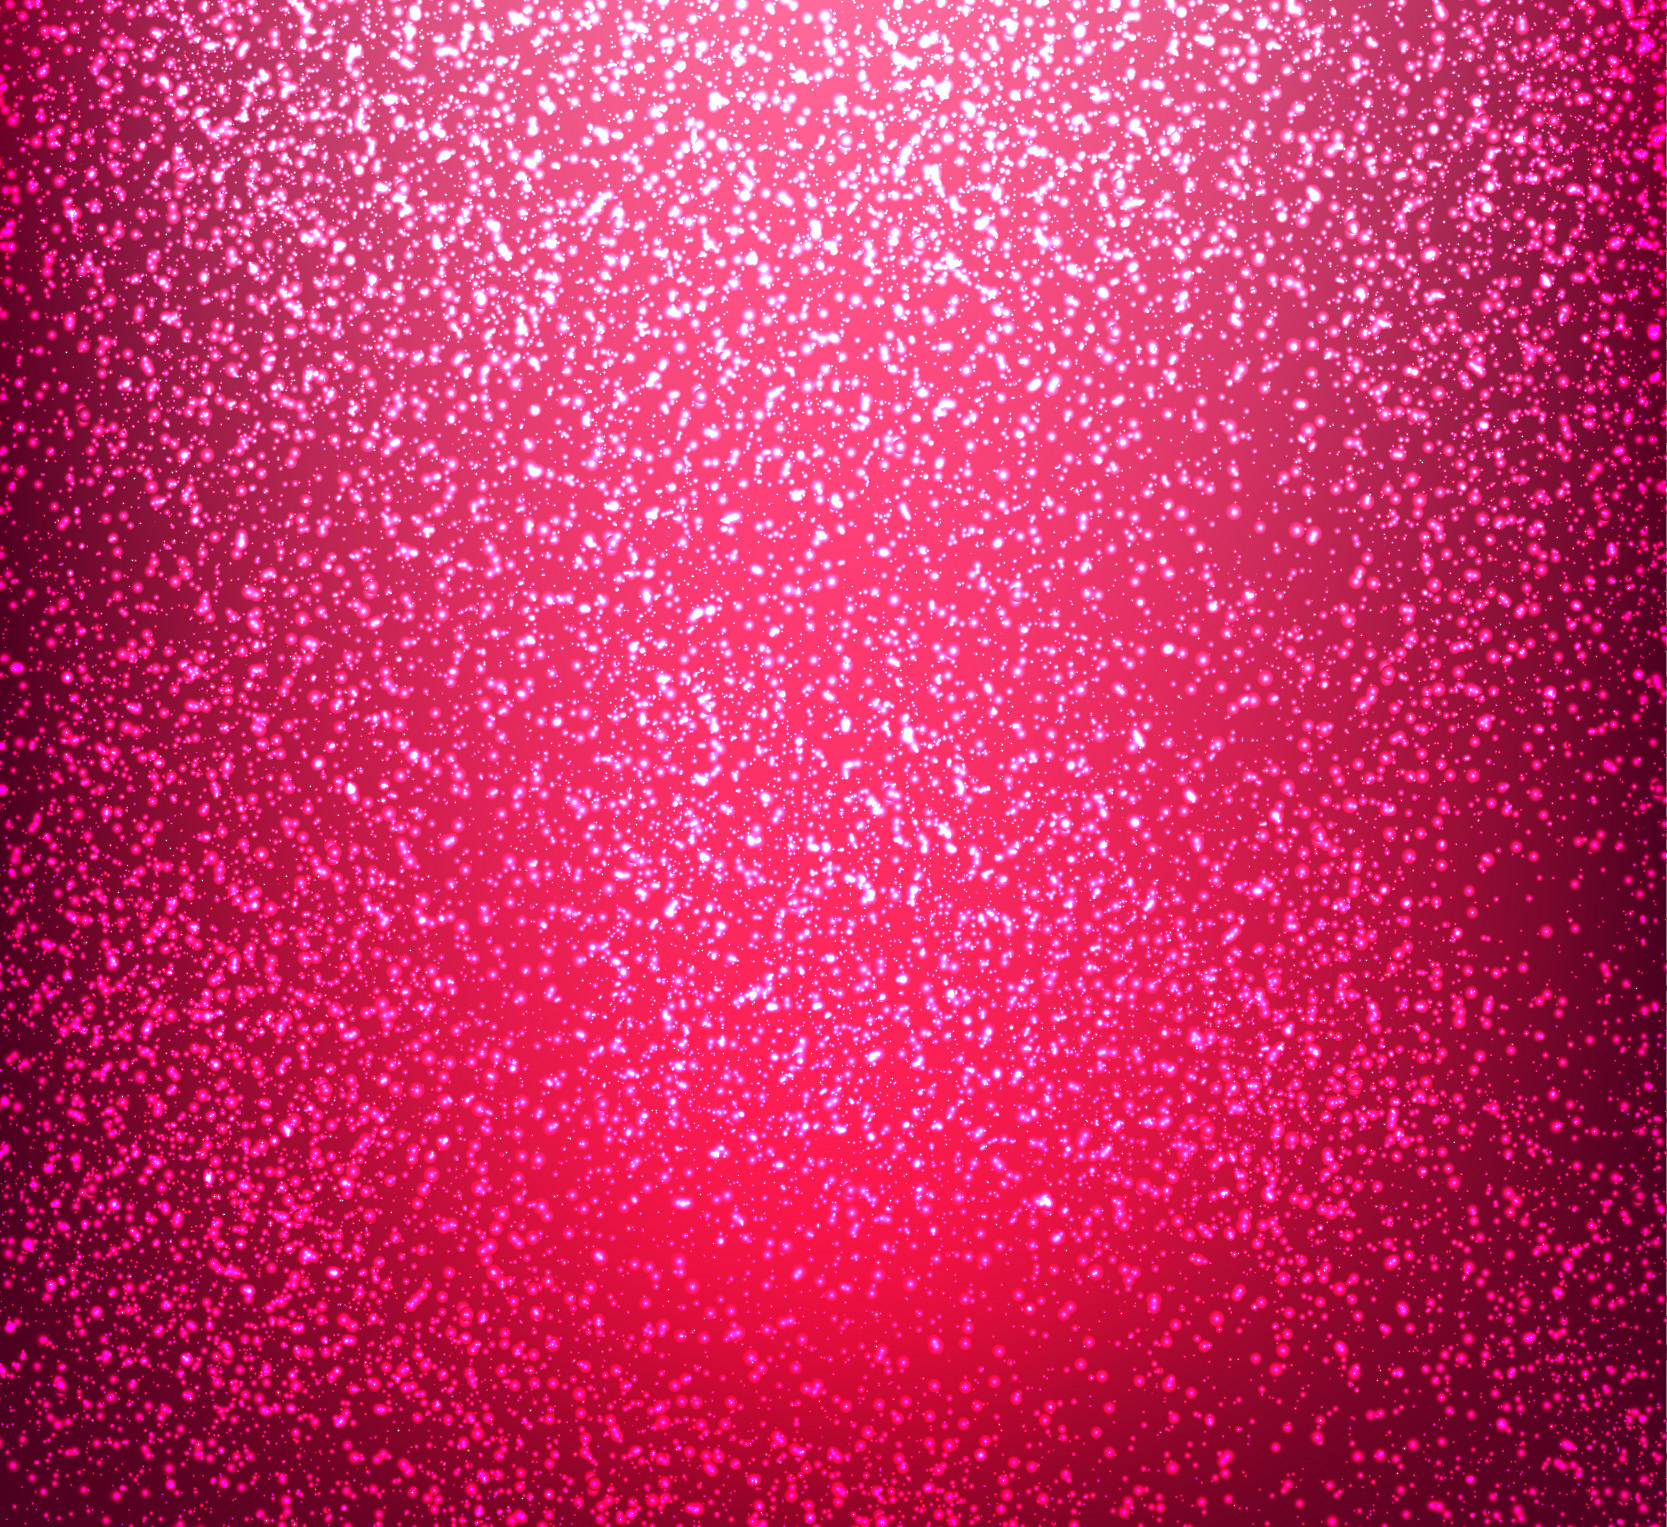 Pink Glitter Background Wallpaper Imgkid The